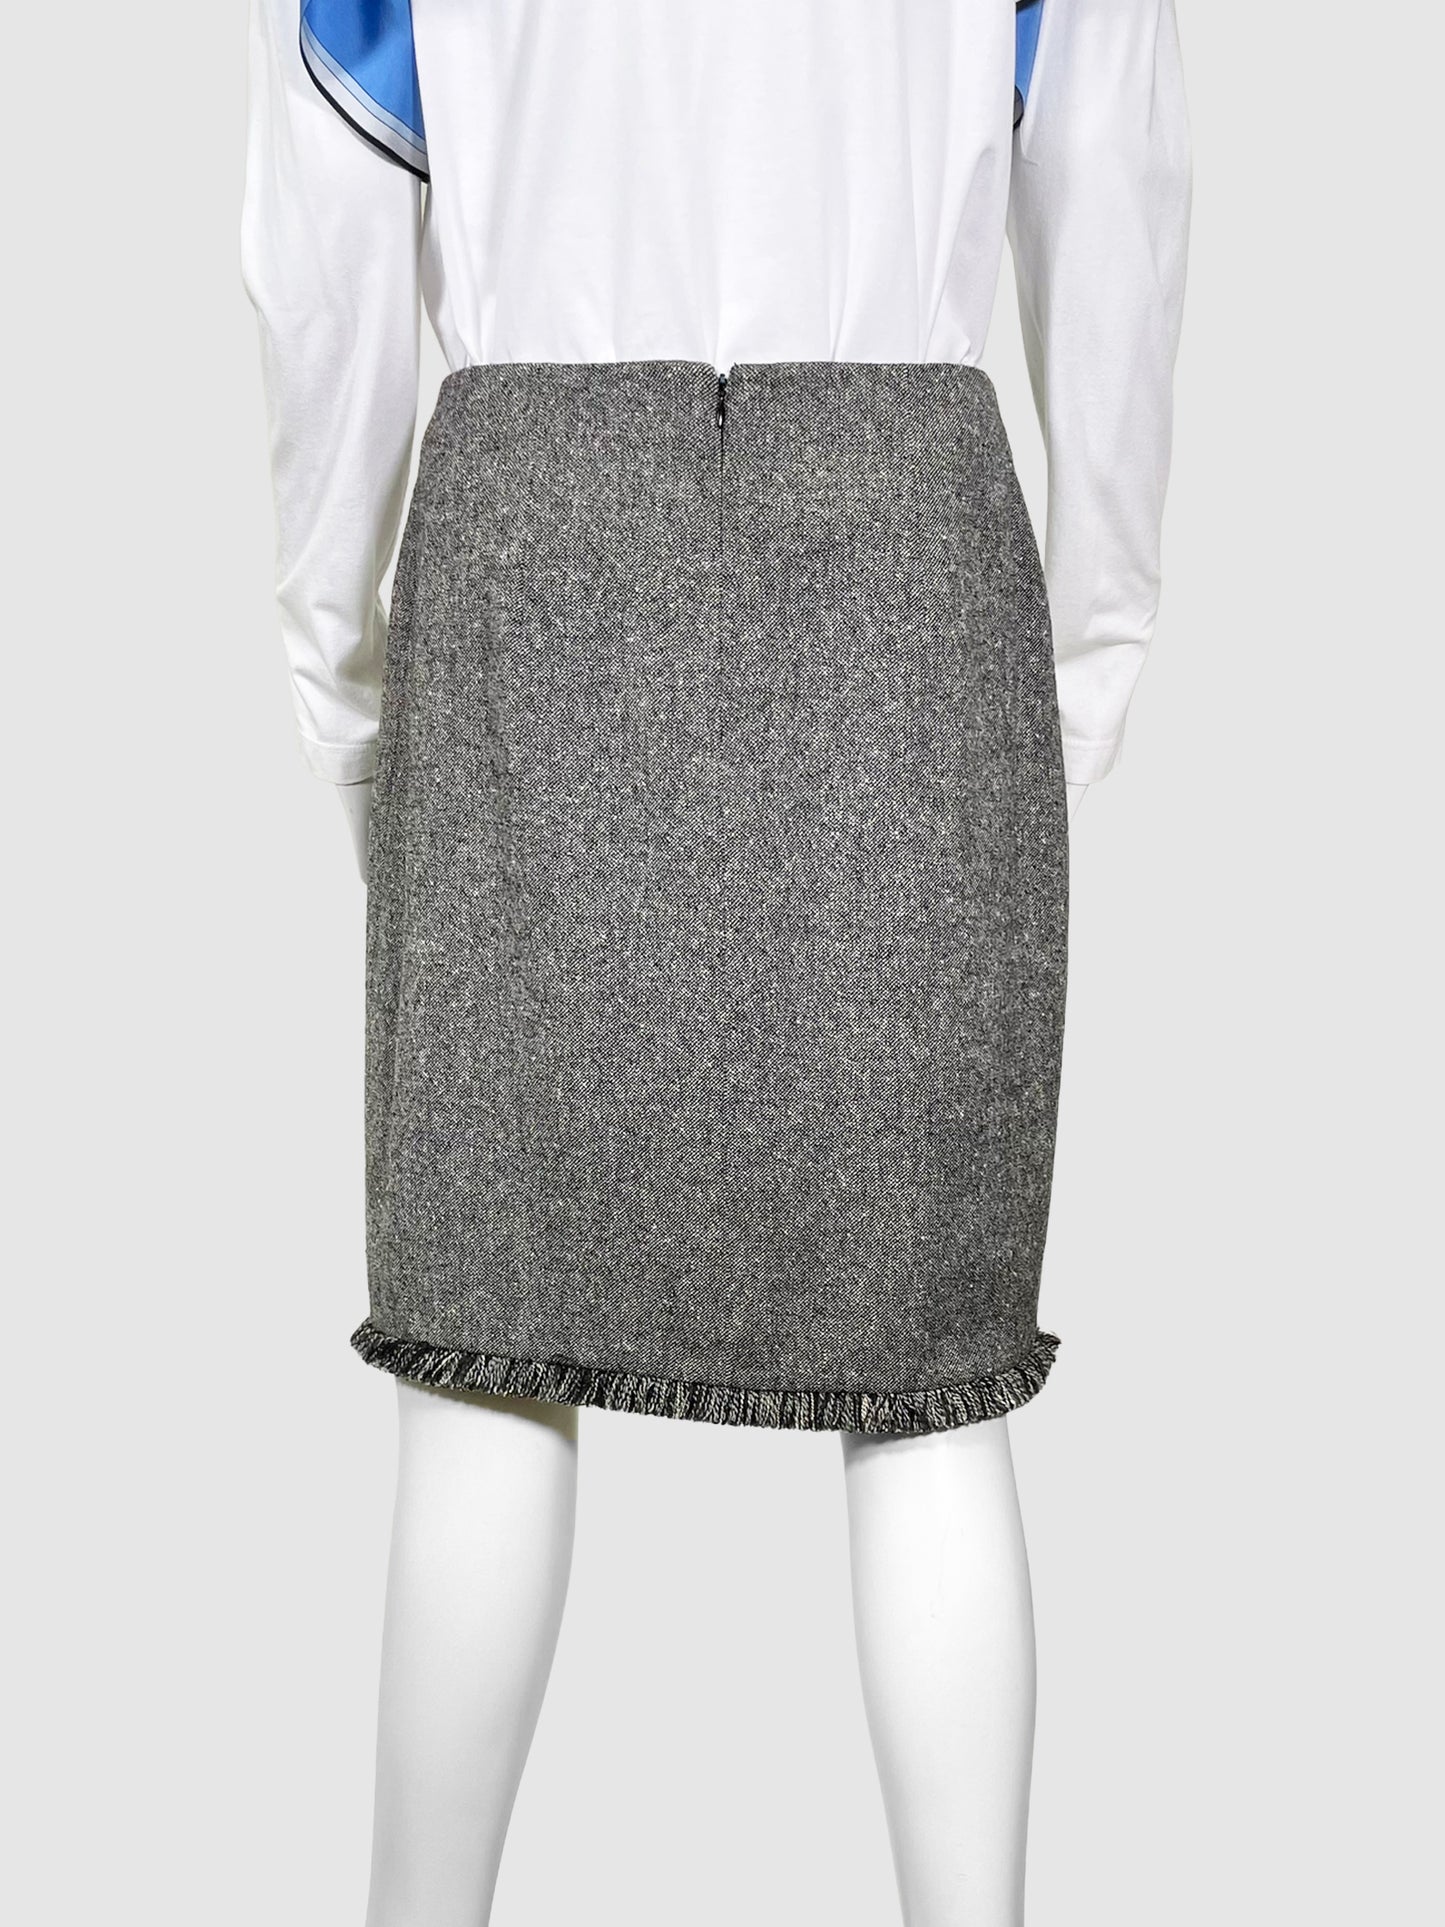 Christian Dior Fringed Hem Skirt - Size 10